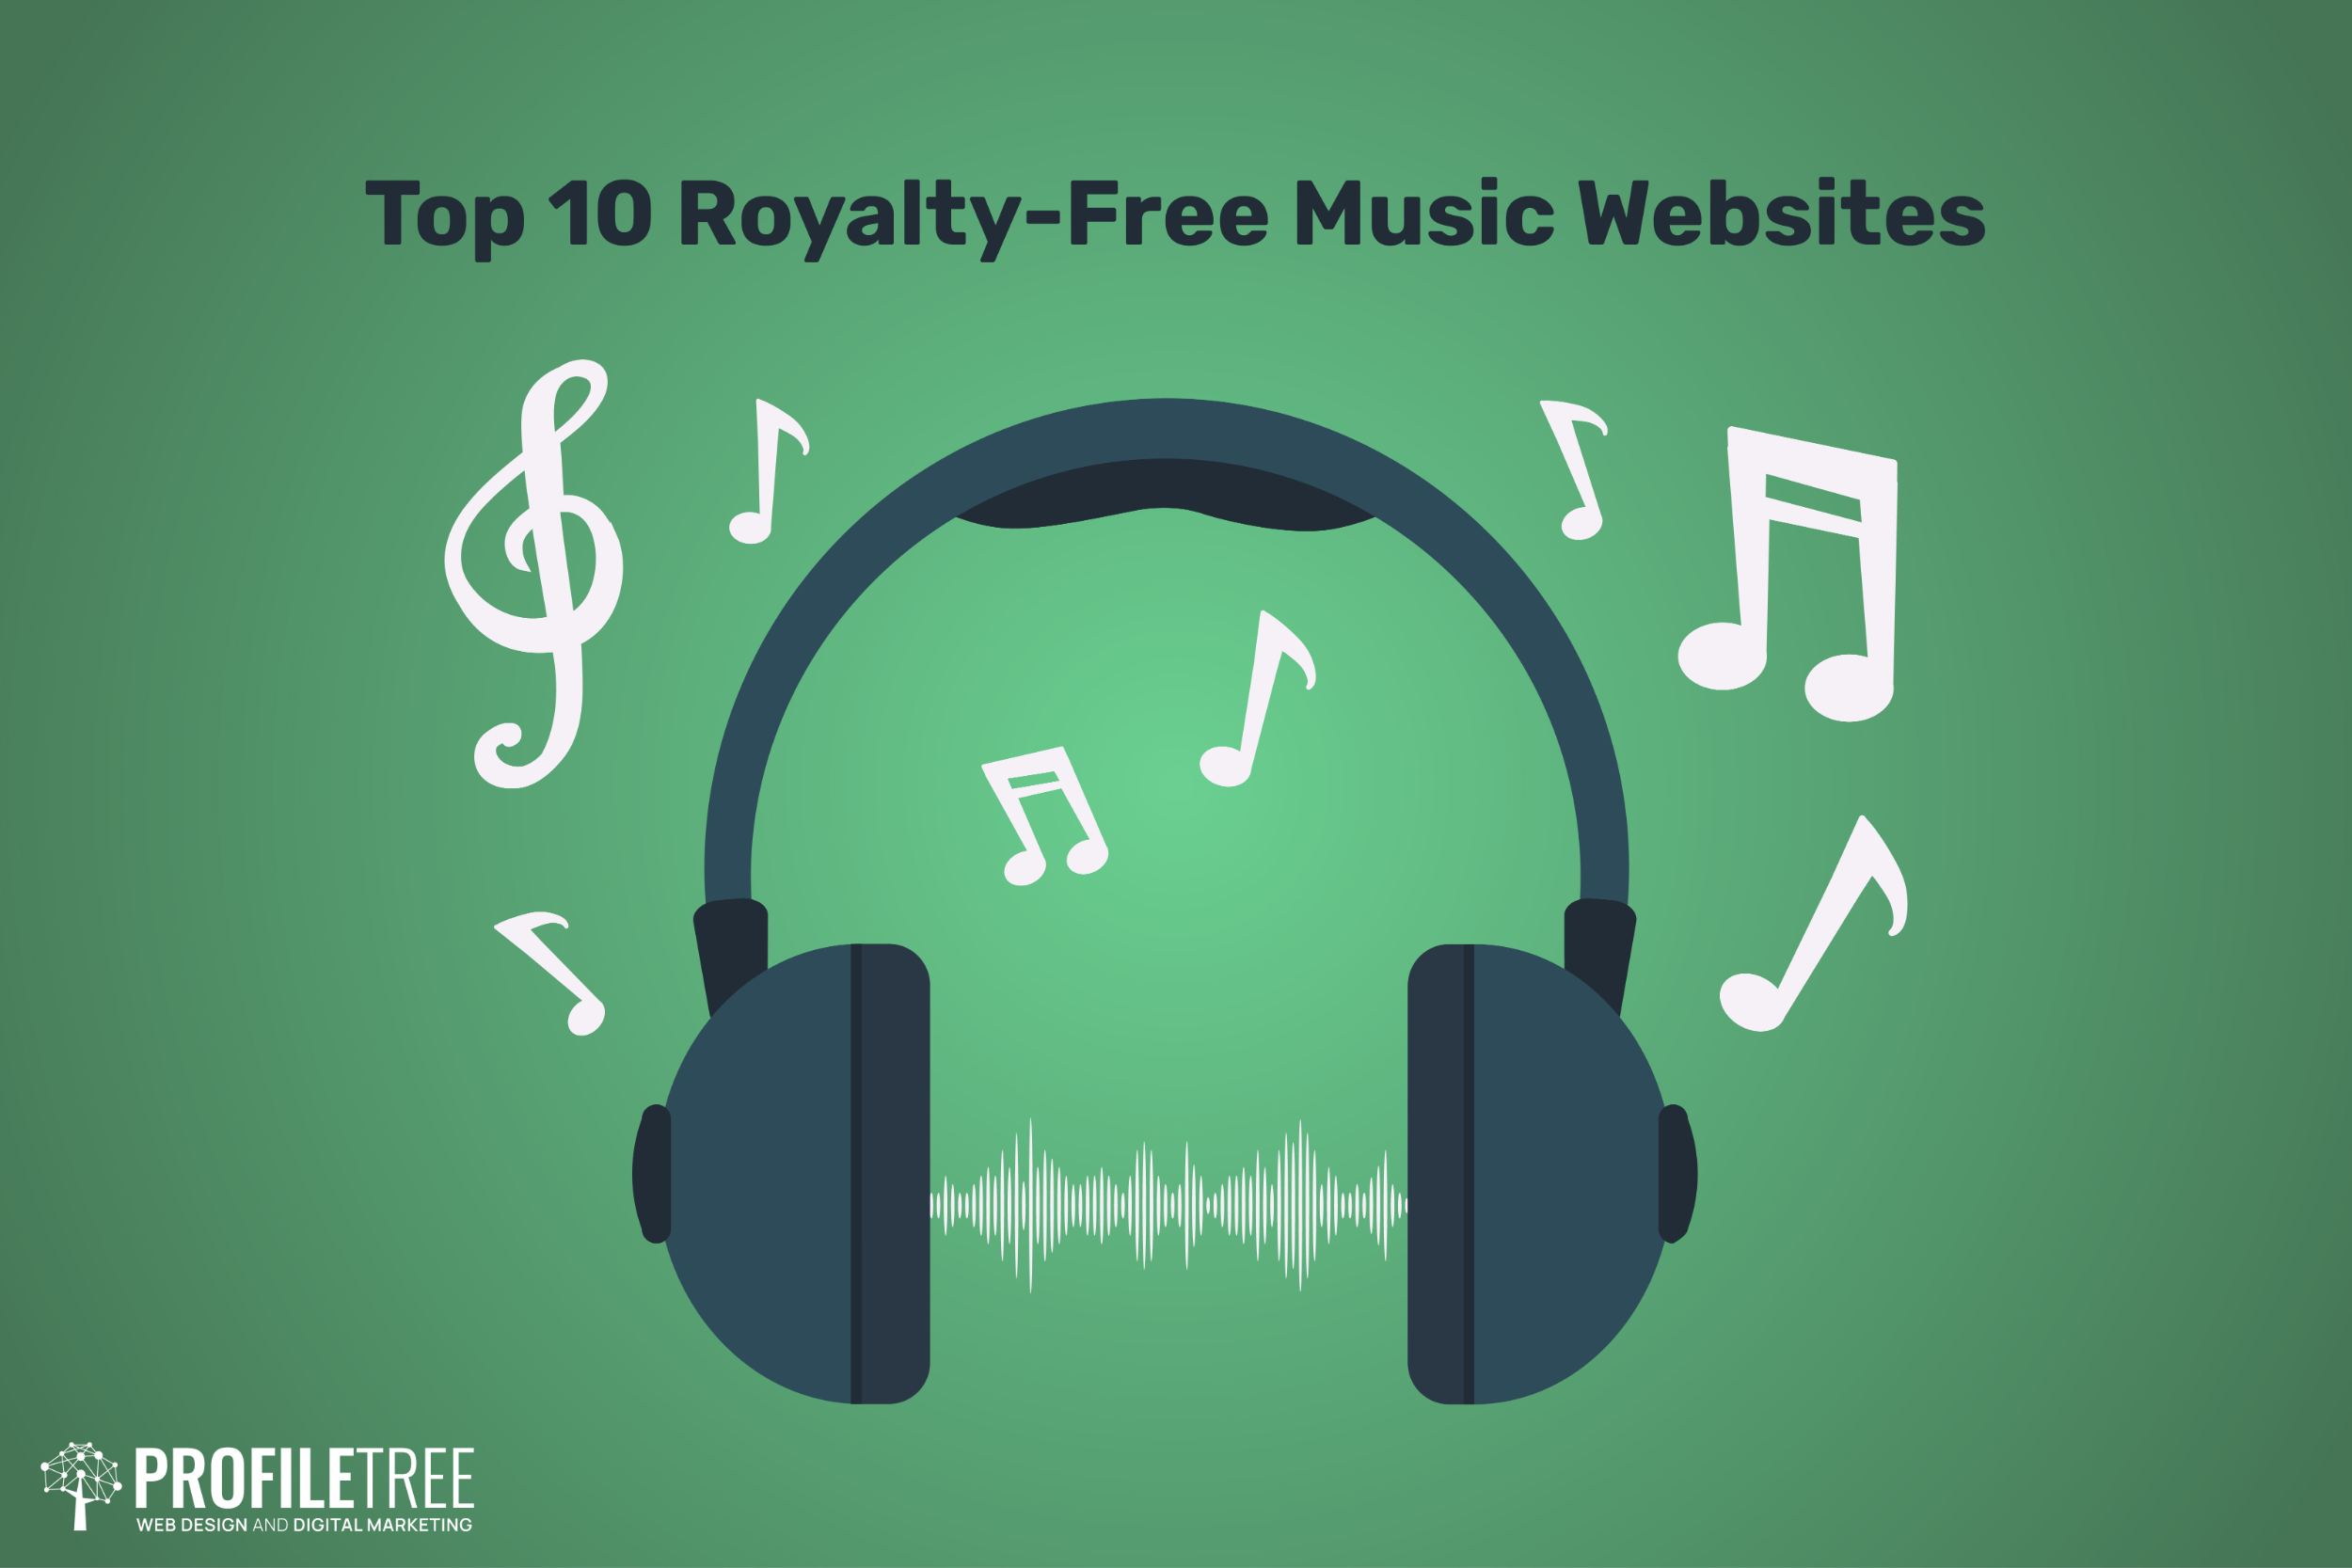 Royalty-free music